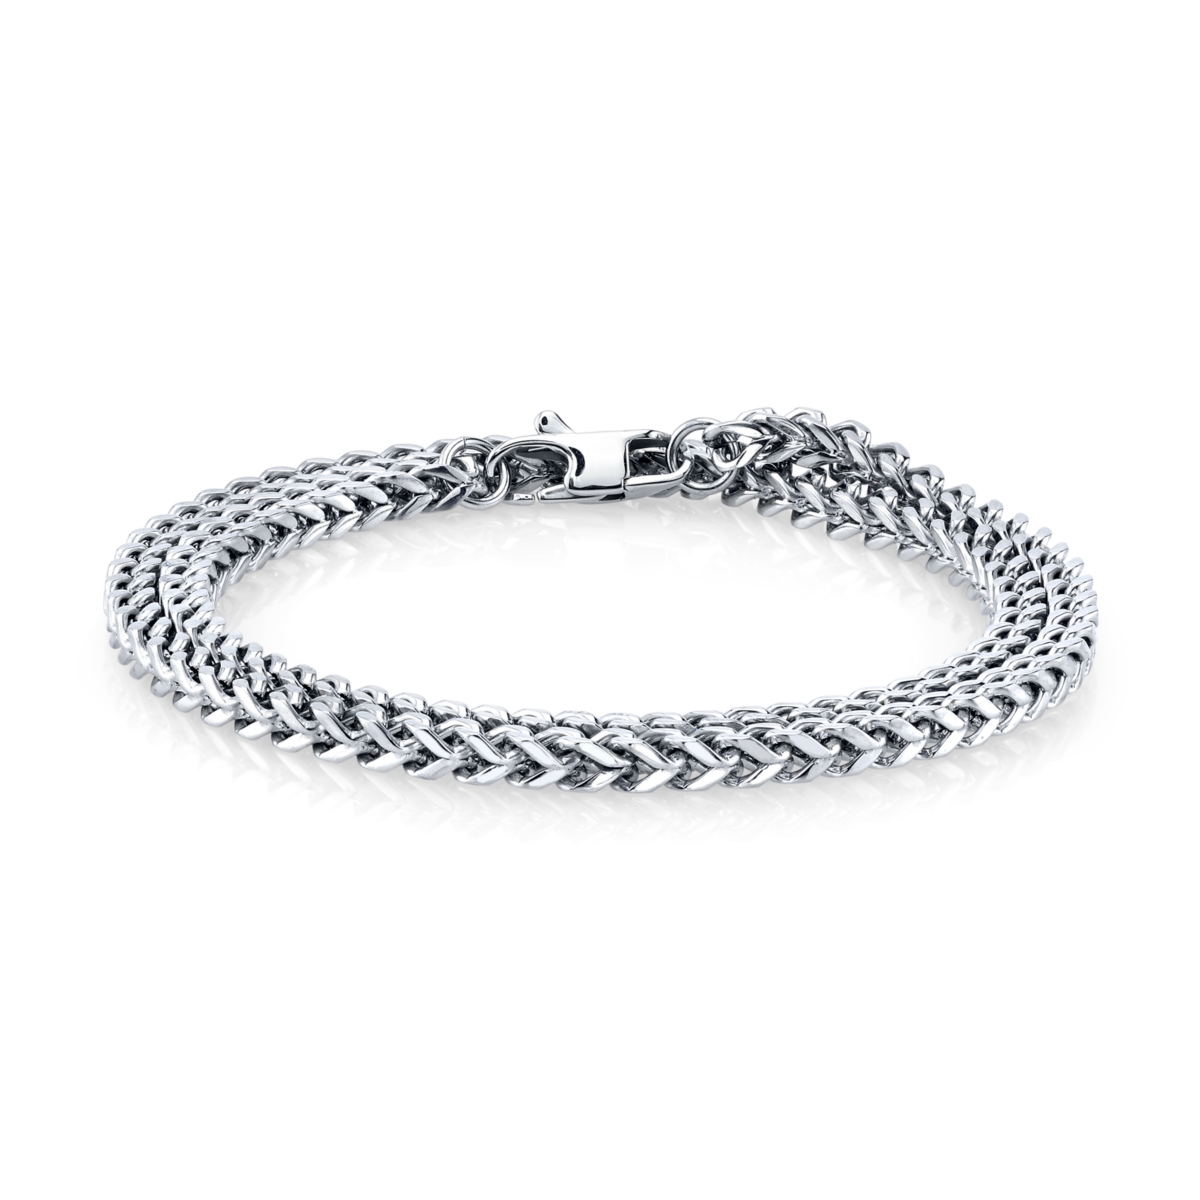 Stainless Steel Franco Chain Bracelet, 8.5" Length - Silver